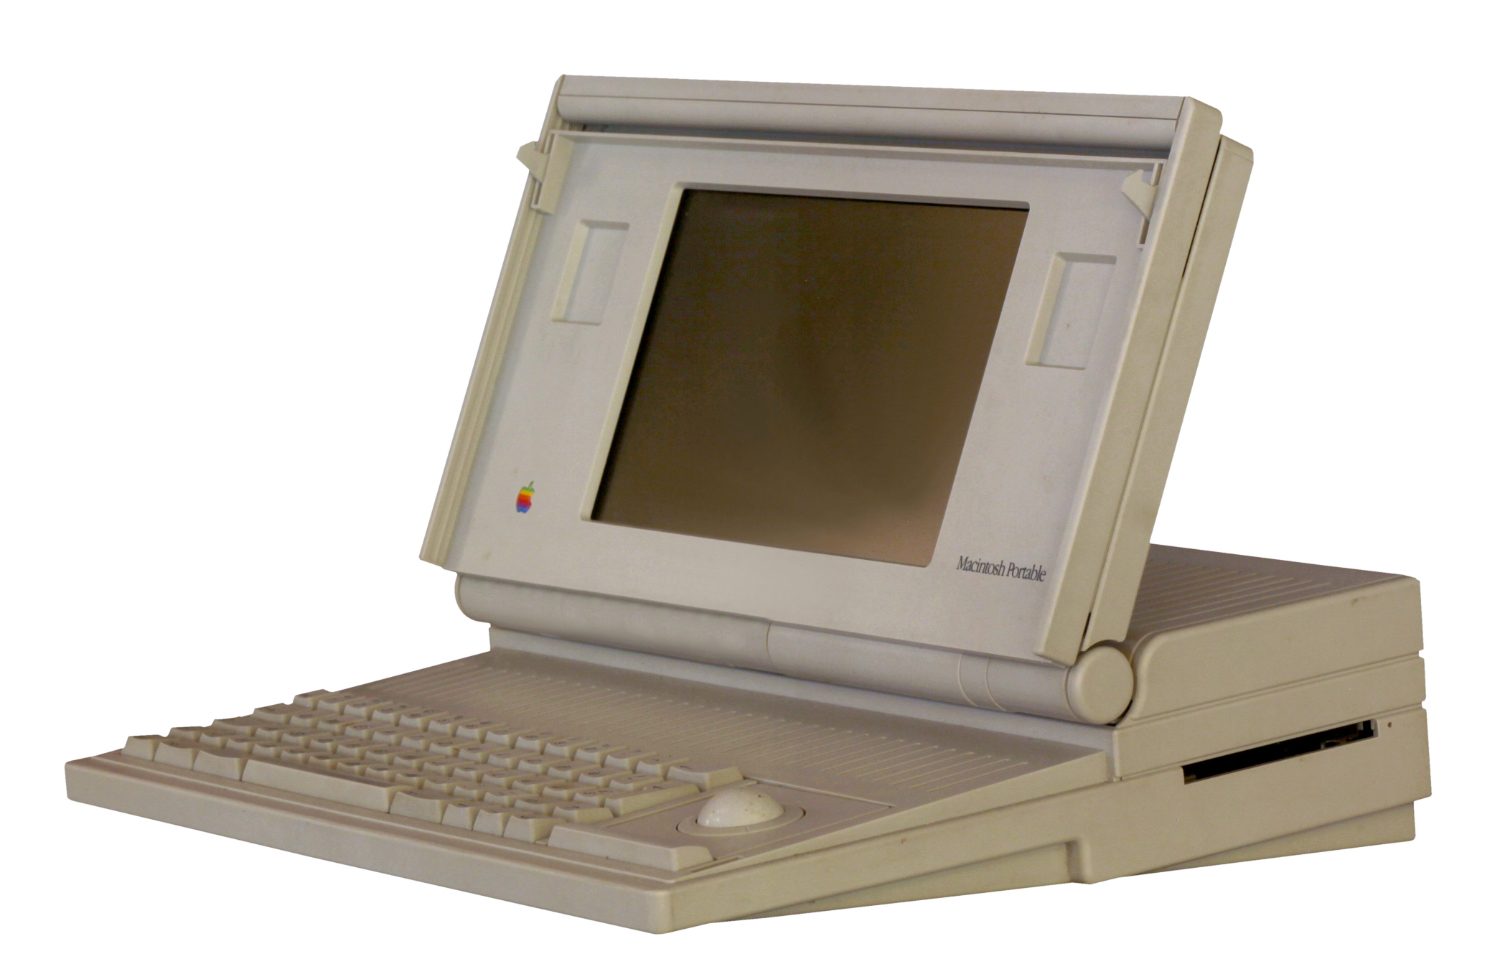 Mac Portable Apple